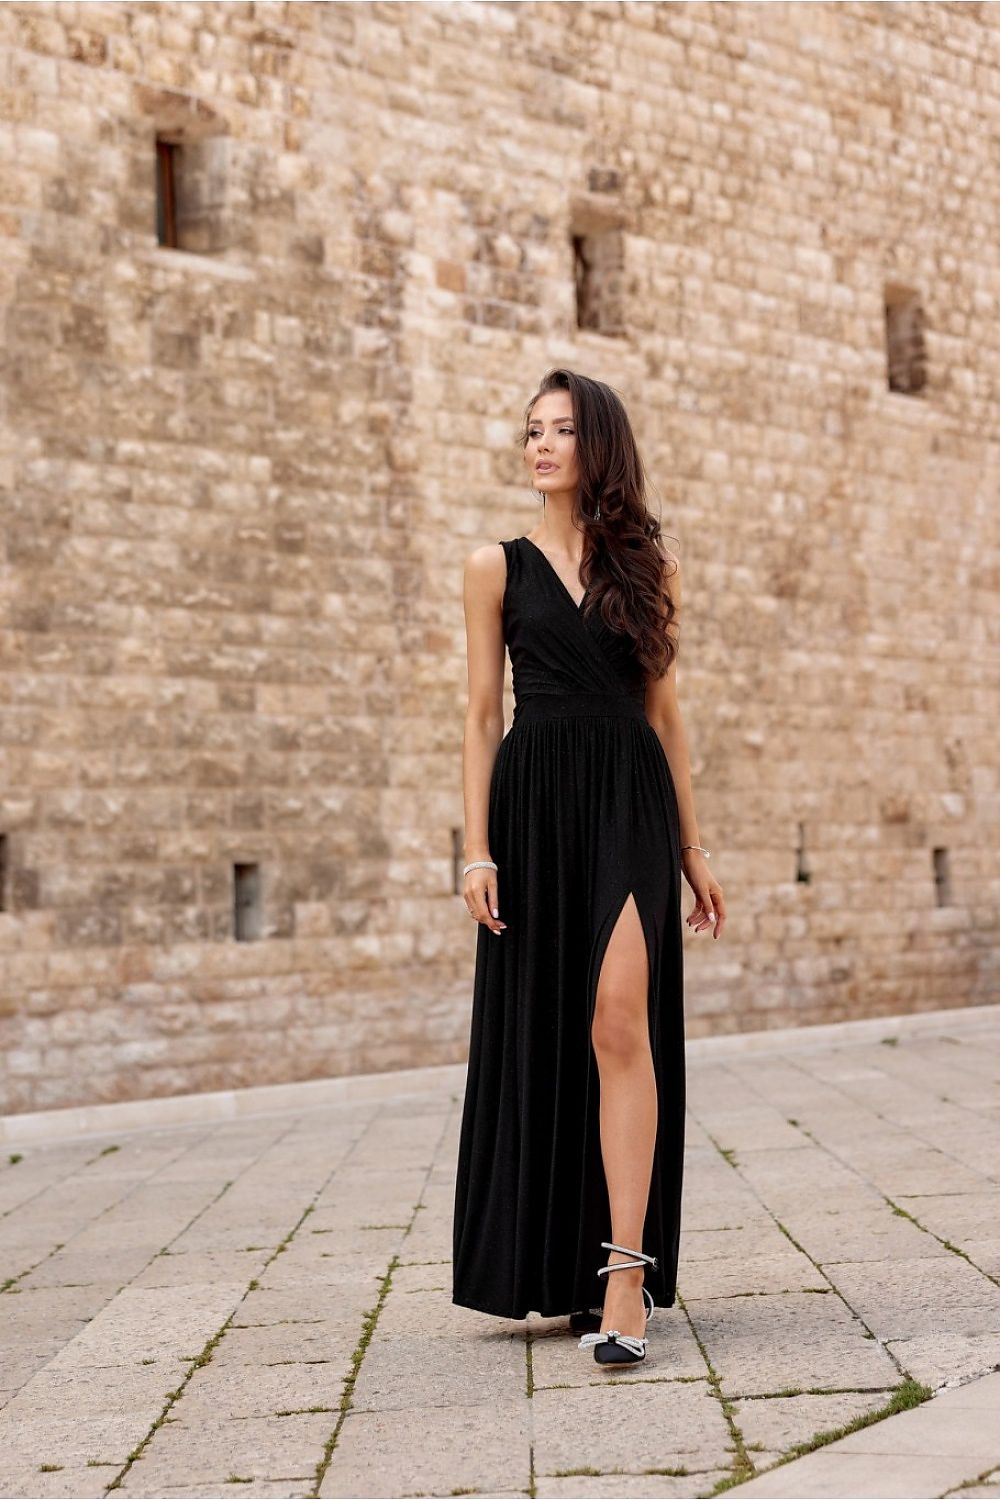 Brocade Black Long Maxi Dress With A Tie Sleeveless Evening Dresses